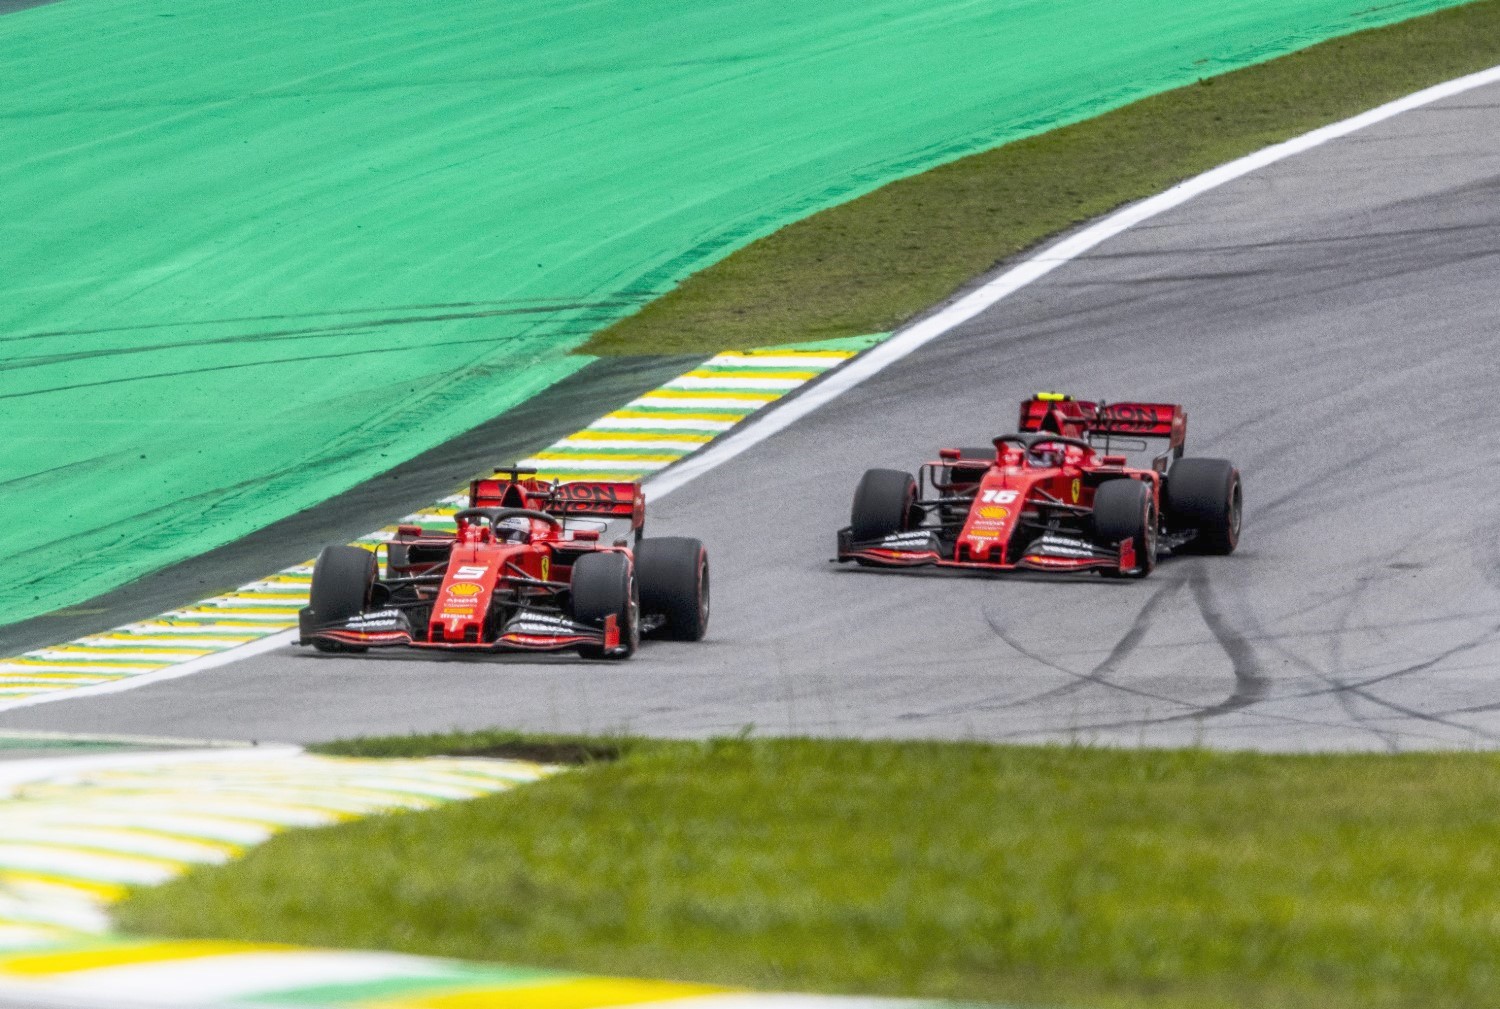 Ferraris circulate together before crashing